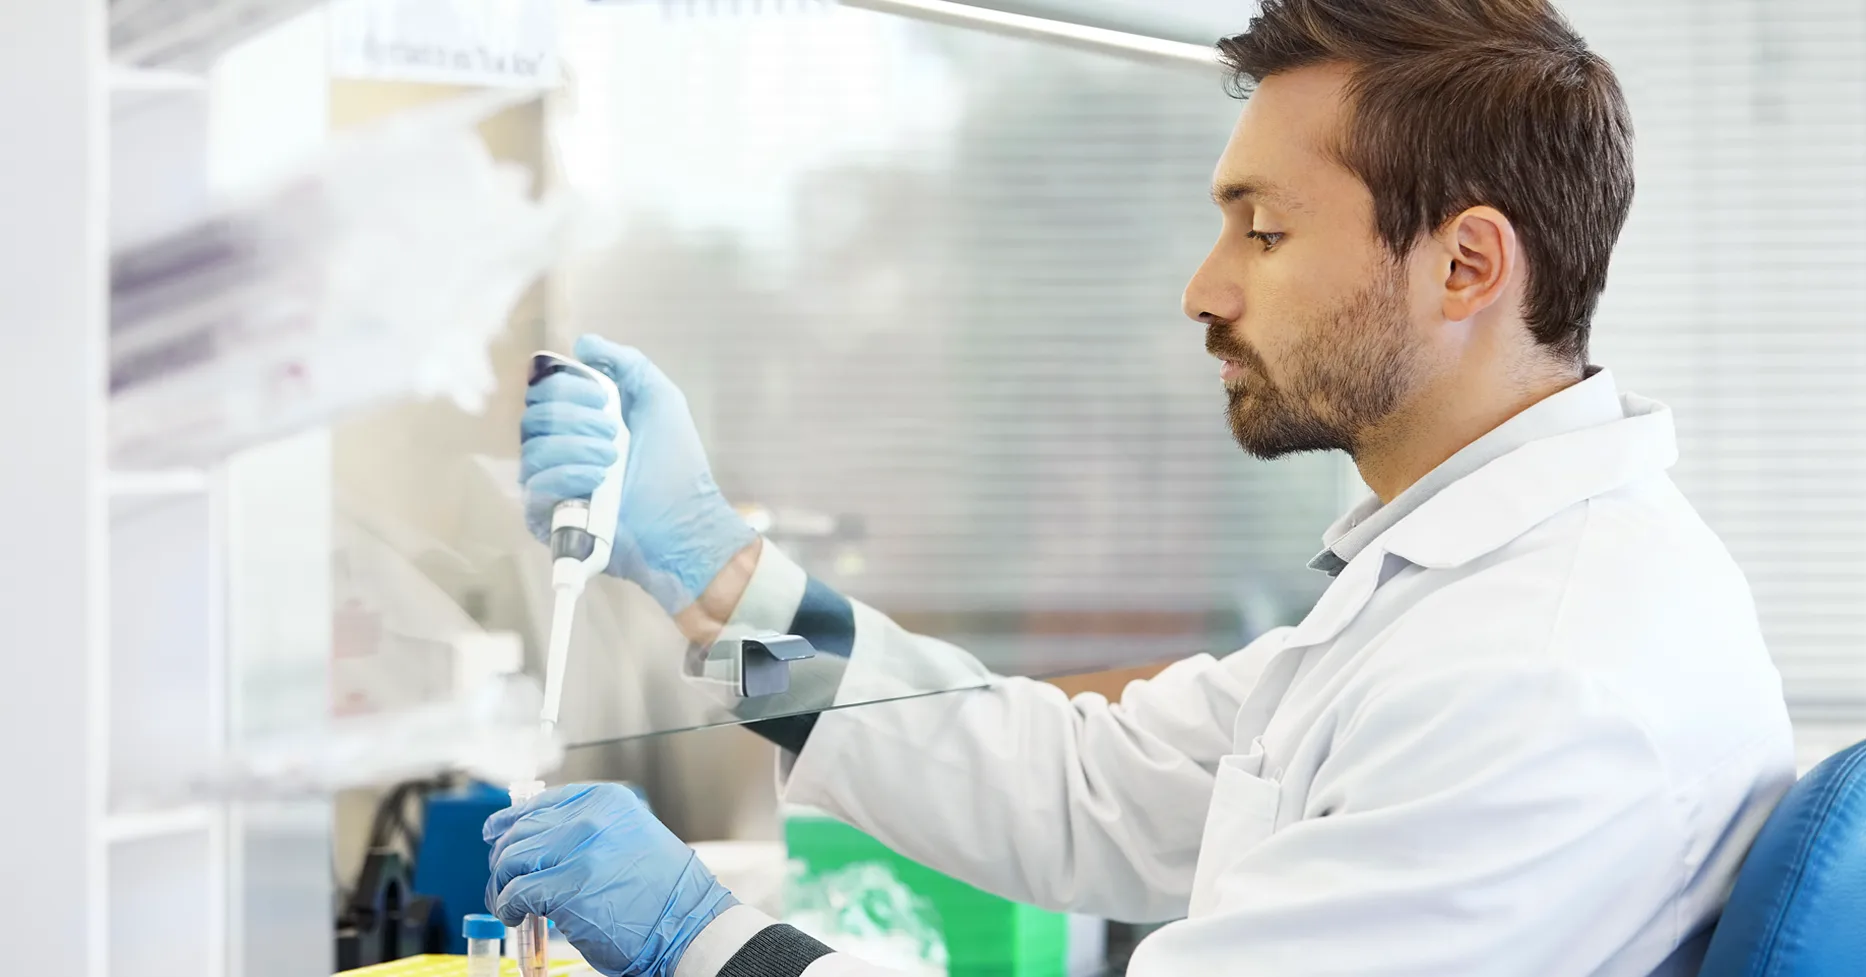 Gloved man in lab coat adding liquid to test tub in medical lab